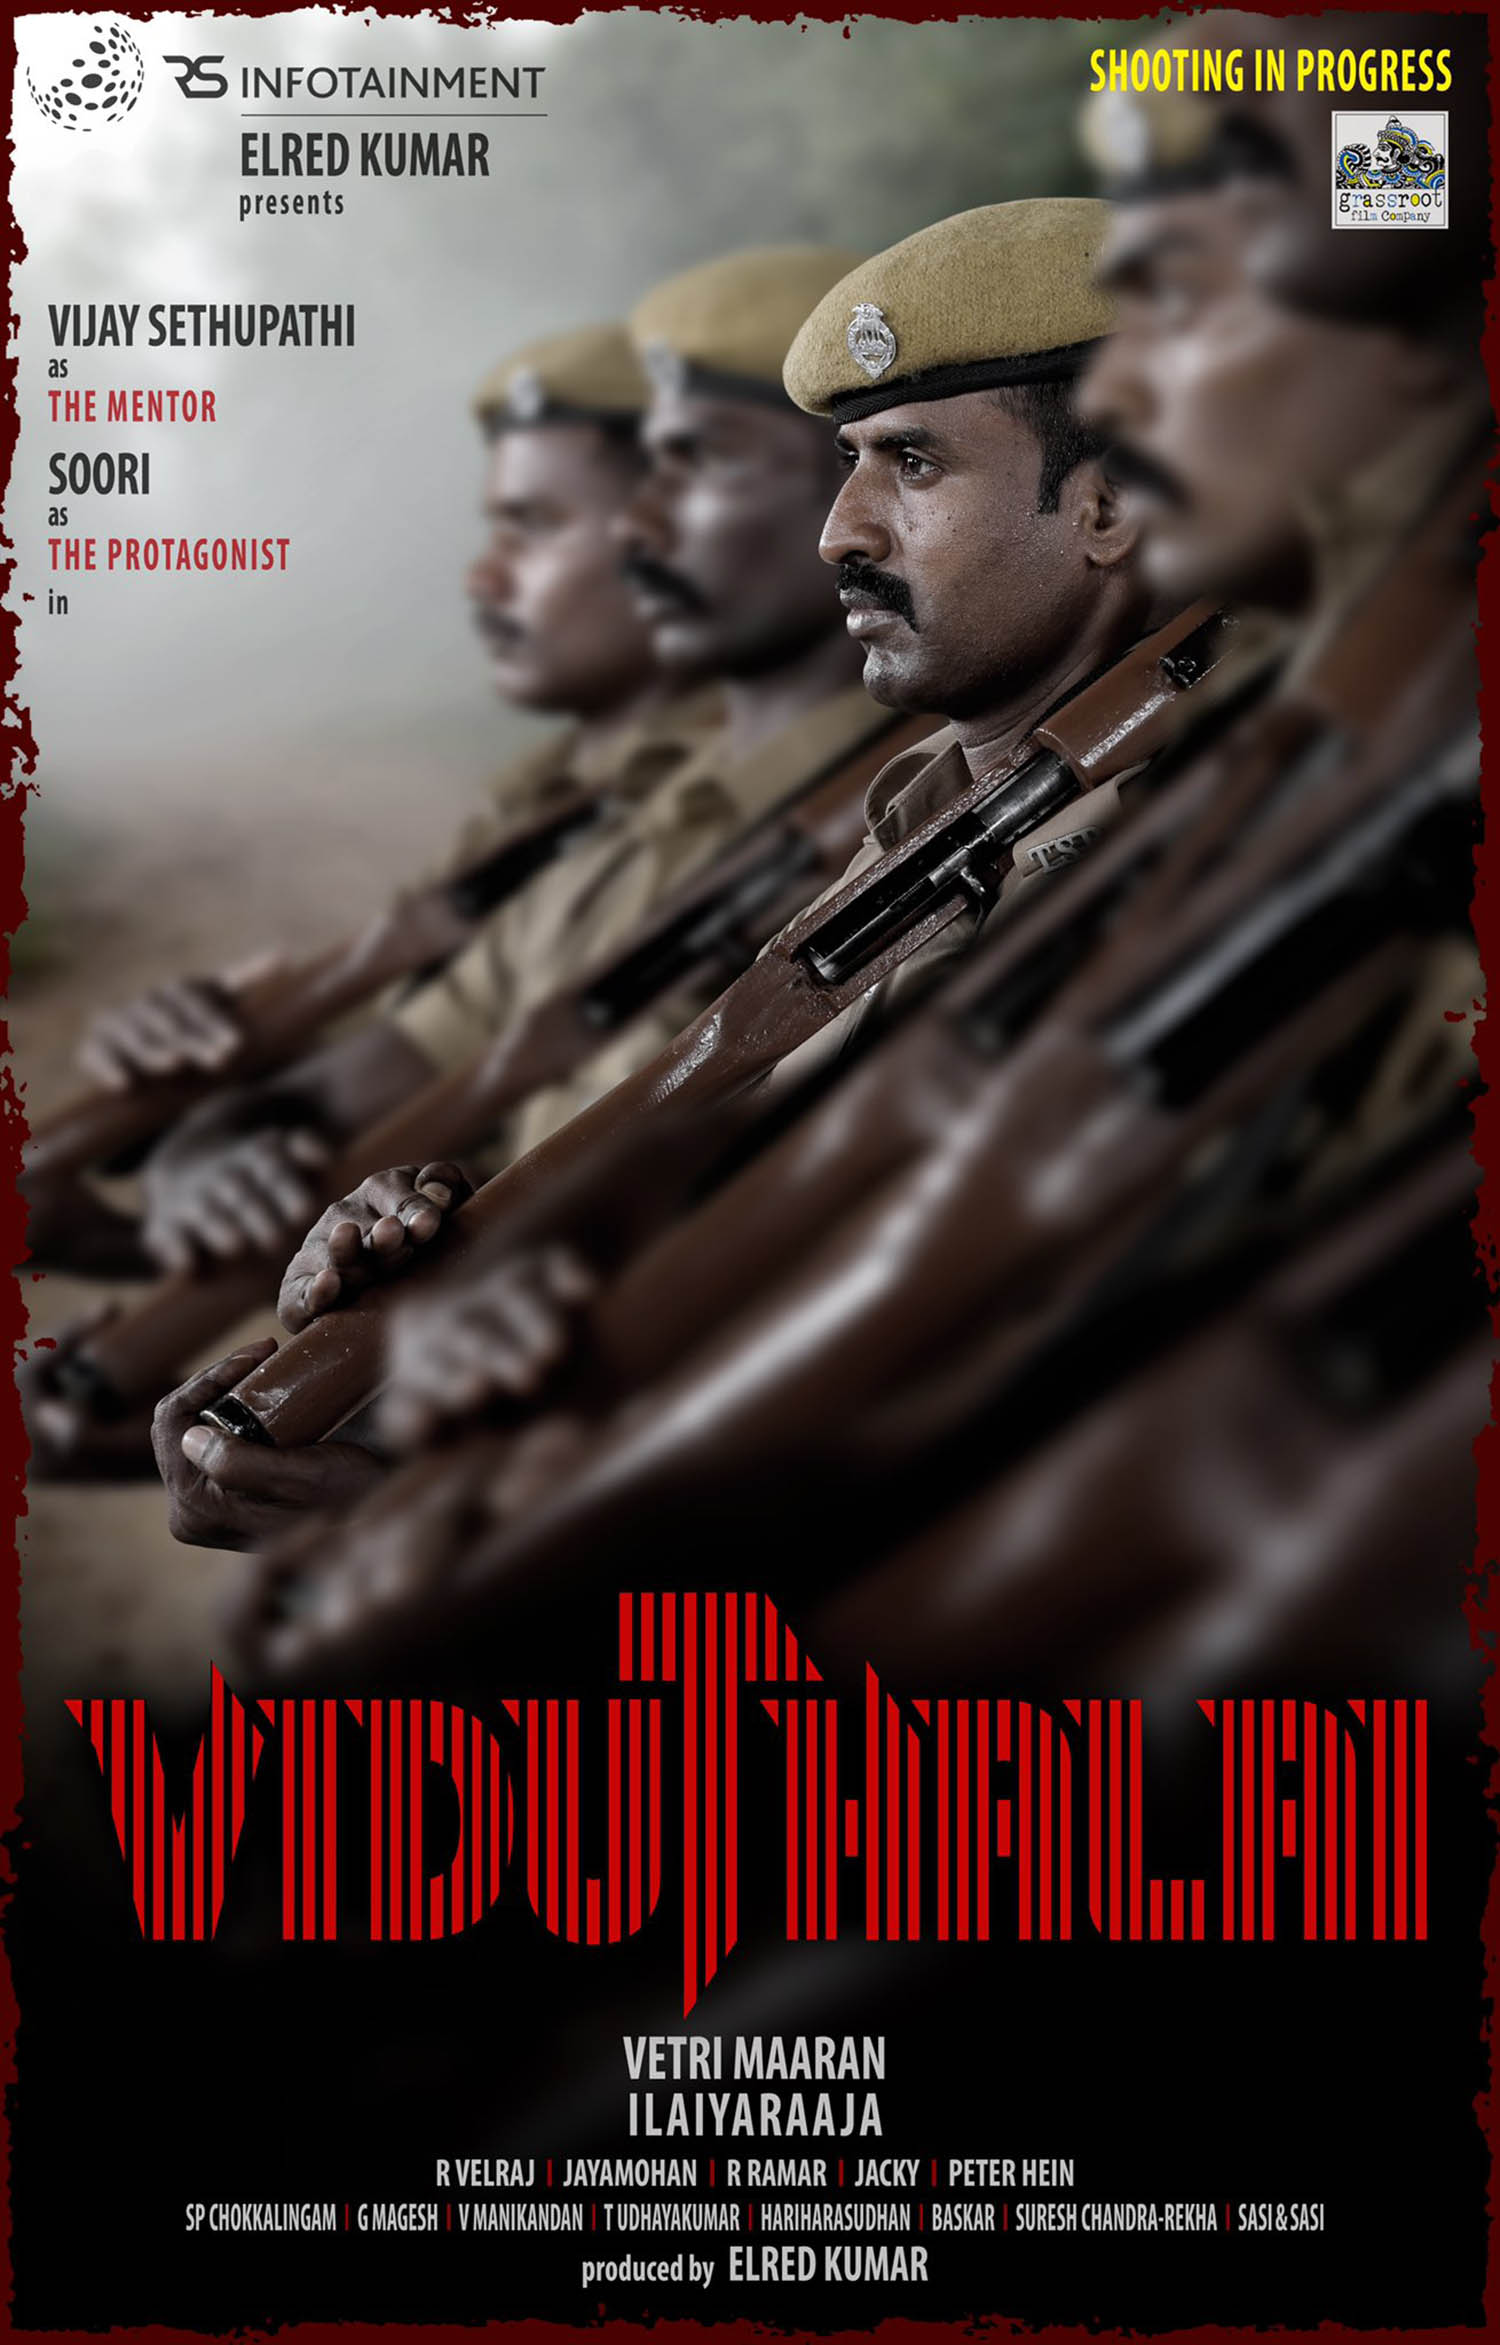 Viduthalai,Viduthalai first look poster,vetrimaaran,vijay sethupathi,soori,vetrimaaran's next with soori and vijay sethupathi,Viduthalai tamil cinema,kollywood cinema,latest tamil cinema news